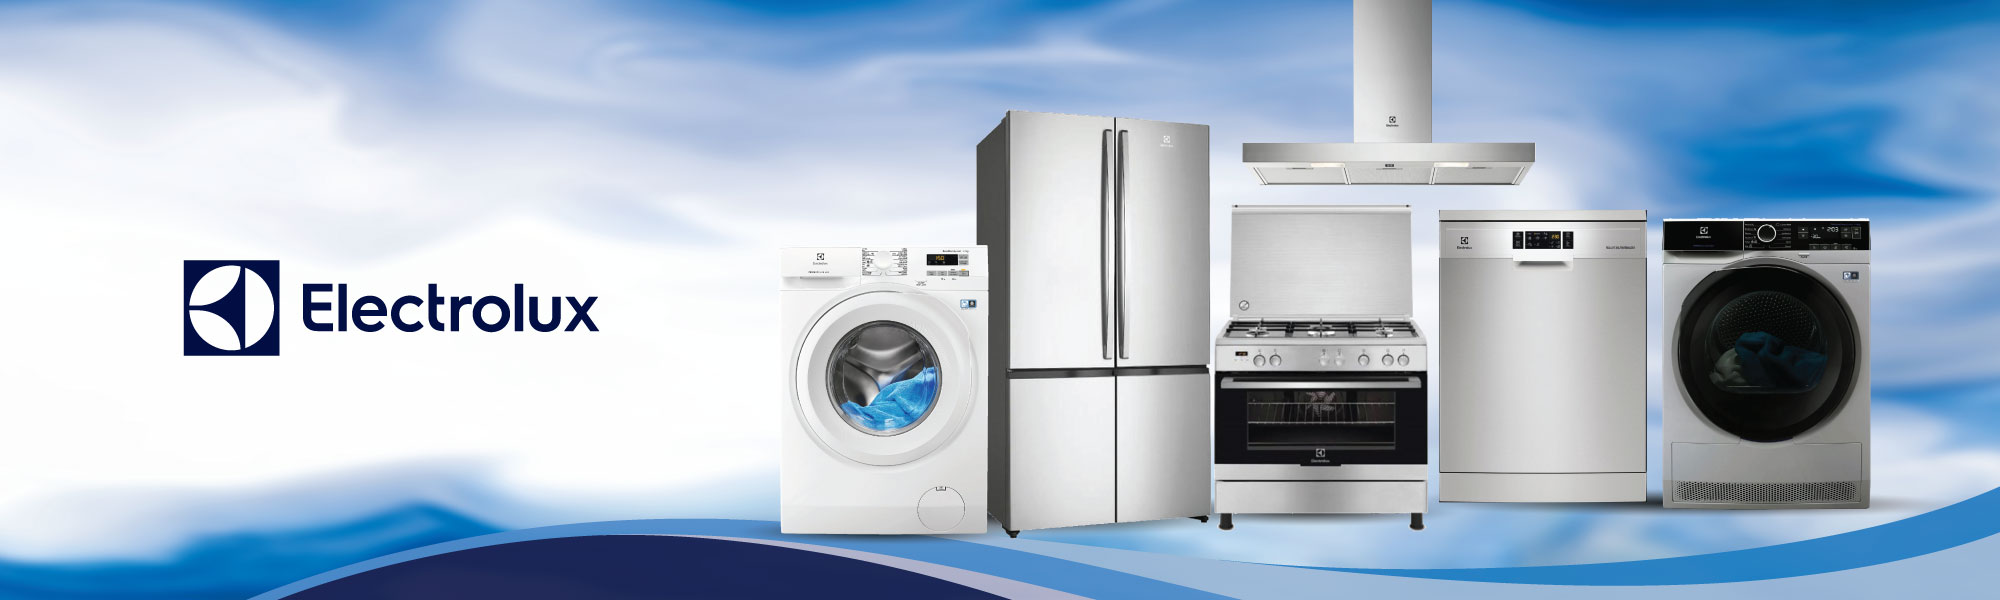 Electrolux Service Center:  Washing Machine Repair, Tumble dryer Repair, Refrigerator Repair, Dishwasher Repair, Cooker Repair & Hood Repair.